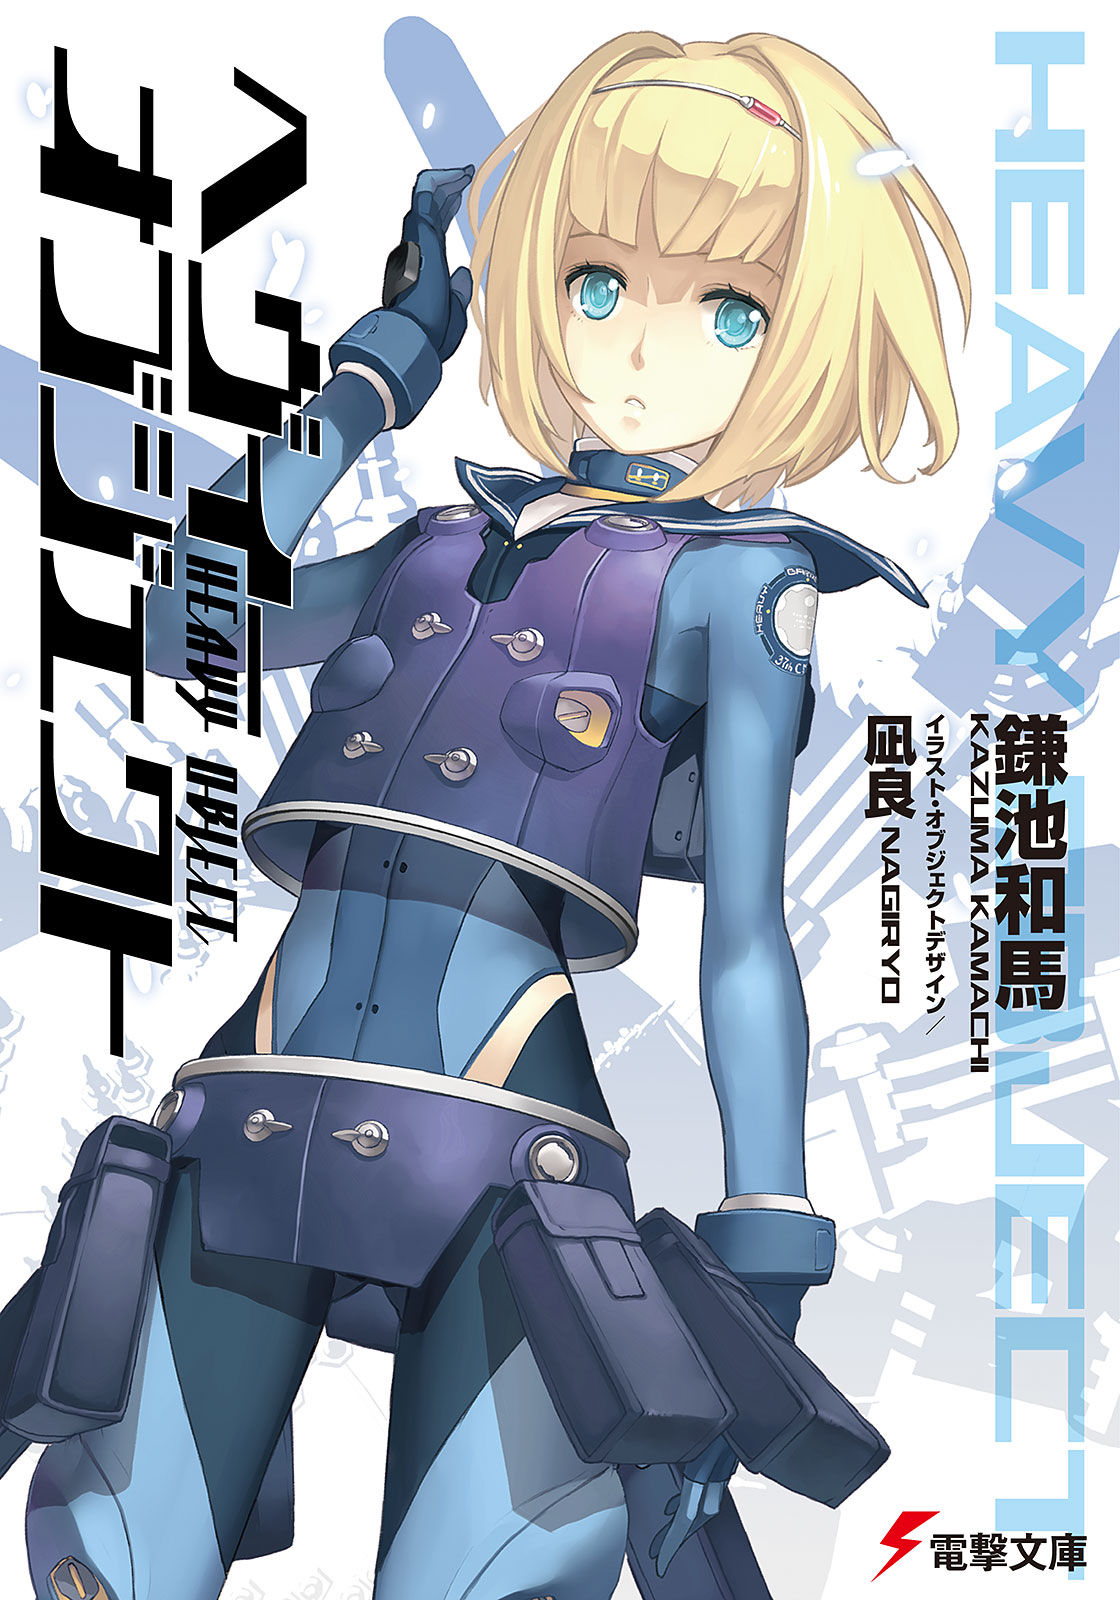 Valvrave the Liberator: Under Taker (Light Novel) Manga